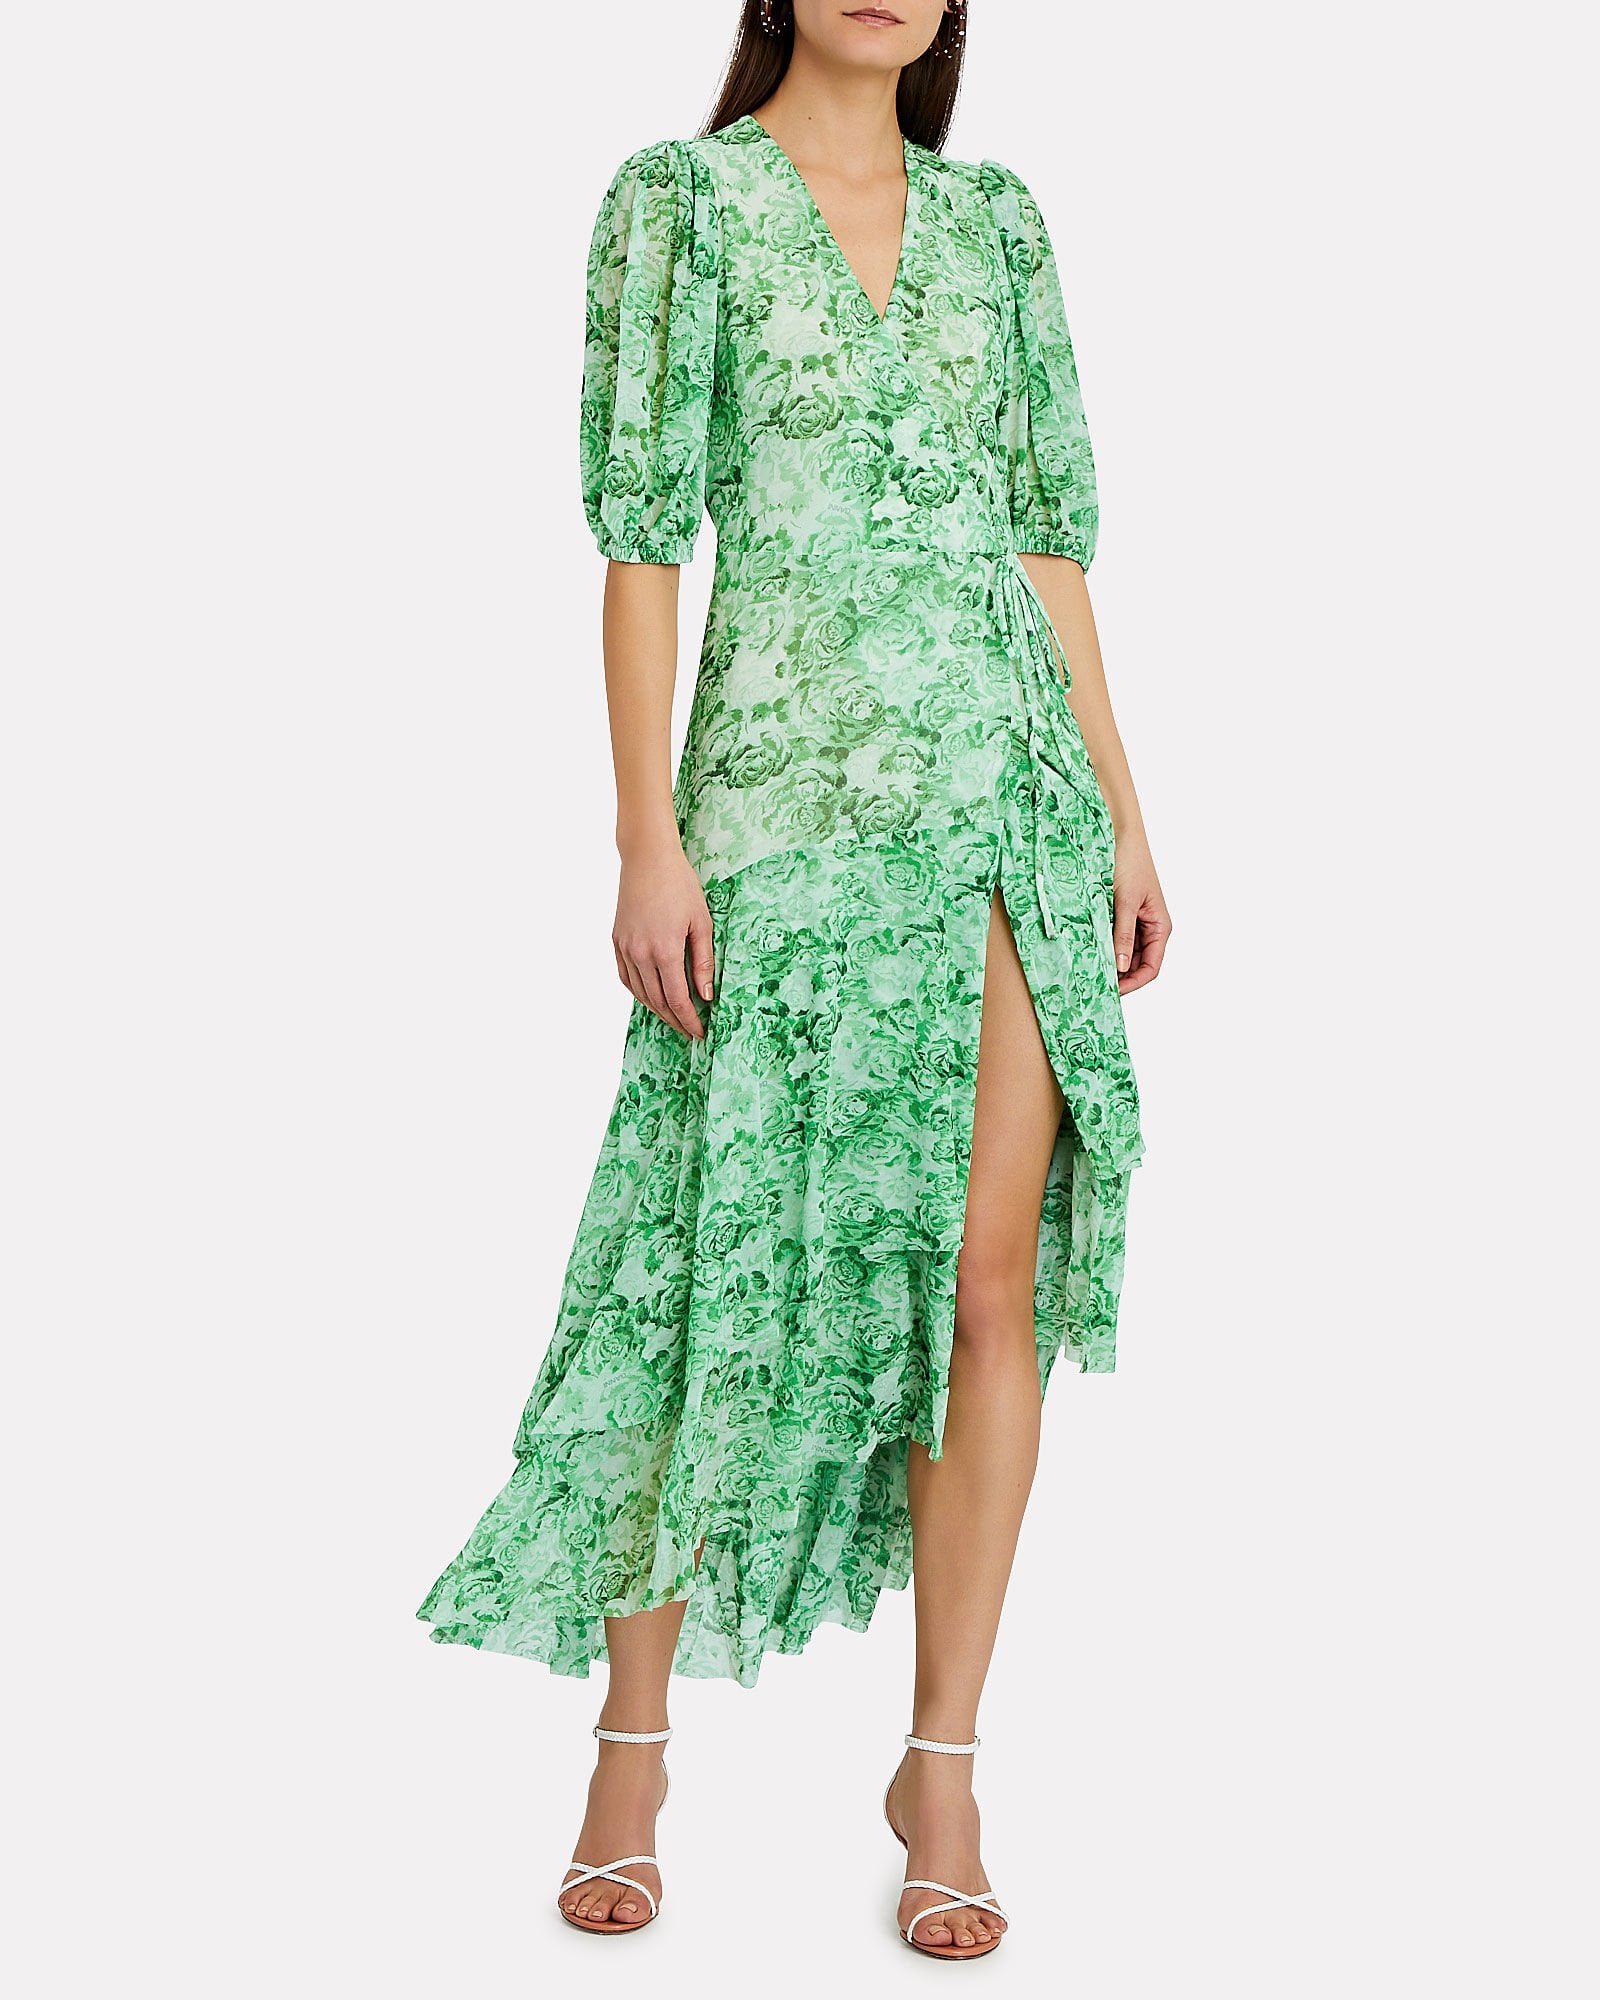 Ganni Floral Print Mesh Wrap Dress | Holy Guacamole! Storm Reid's Avocado  Graduation Dress Is Cute and Affordable | POPSUGAR Fashion Photo 6